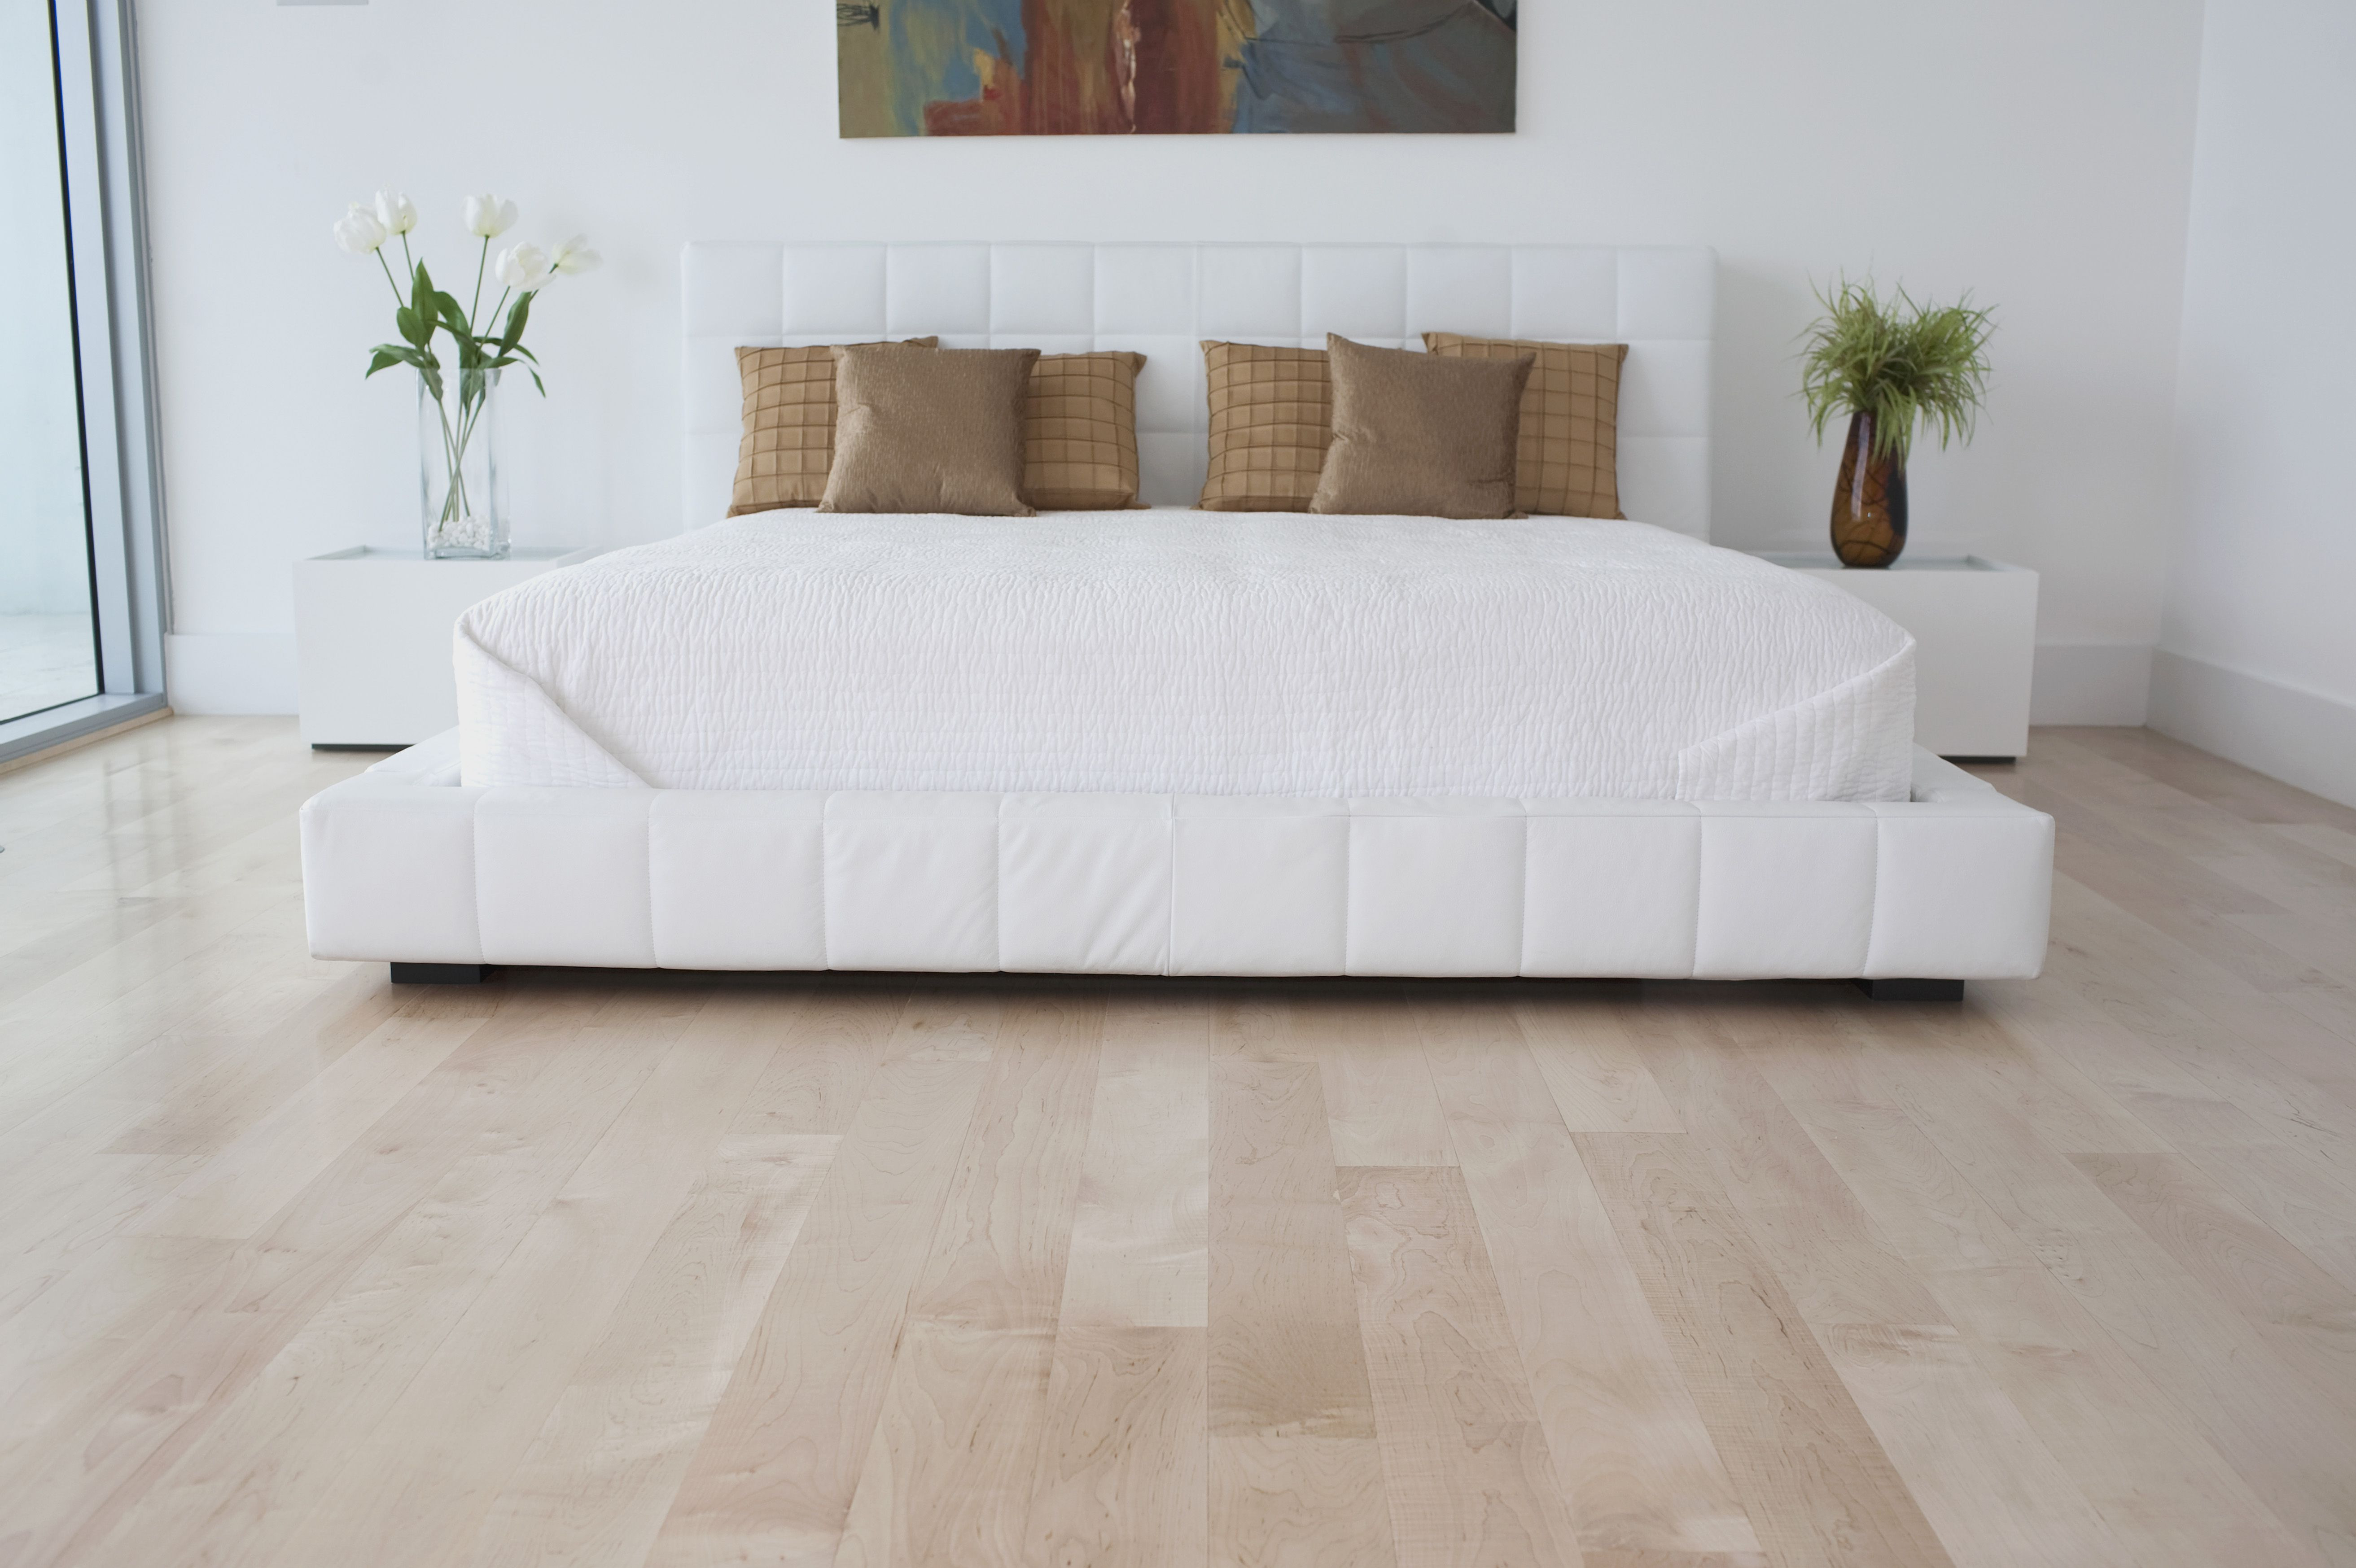 Tavern Grade Hardwood Flooring Canada Of 5 Best Bedroom Flooring Materials with Regard to Interiors Of A Bedroom 126171674 57be063d3df78cc16e3cc6cf